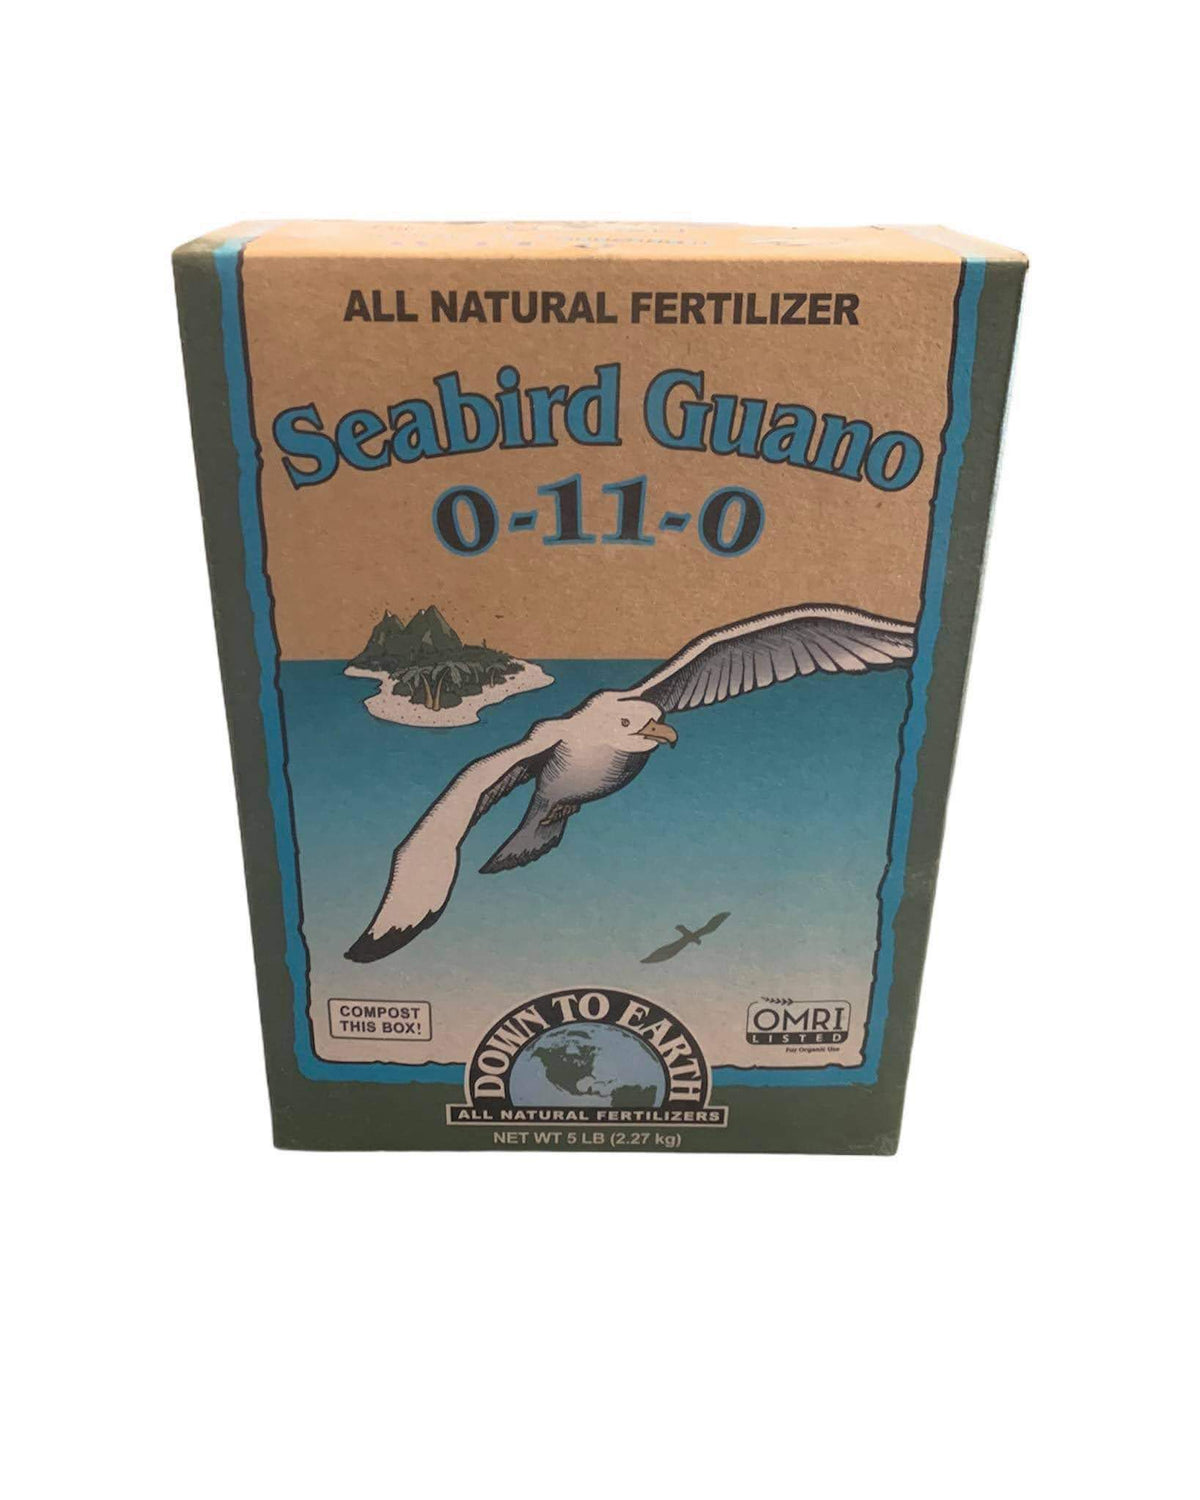 Seabird Guano 0-11-0.  5lb